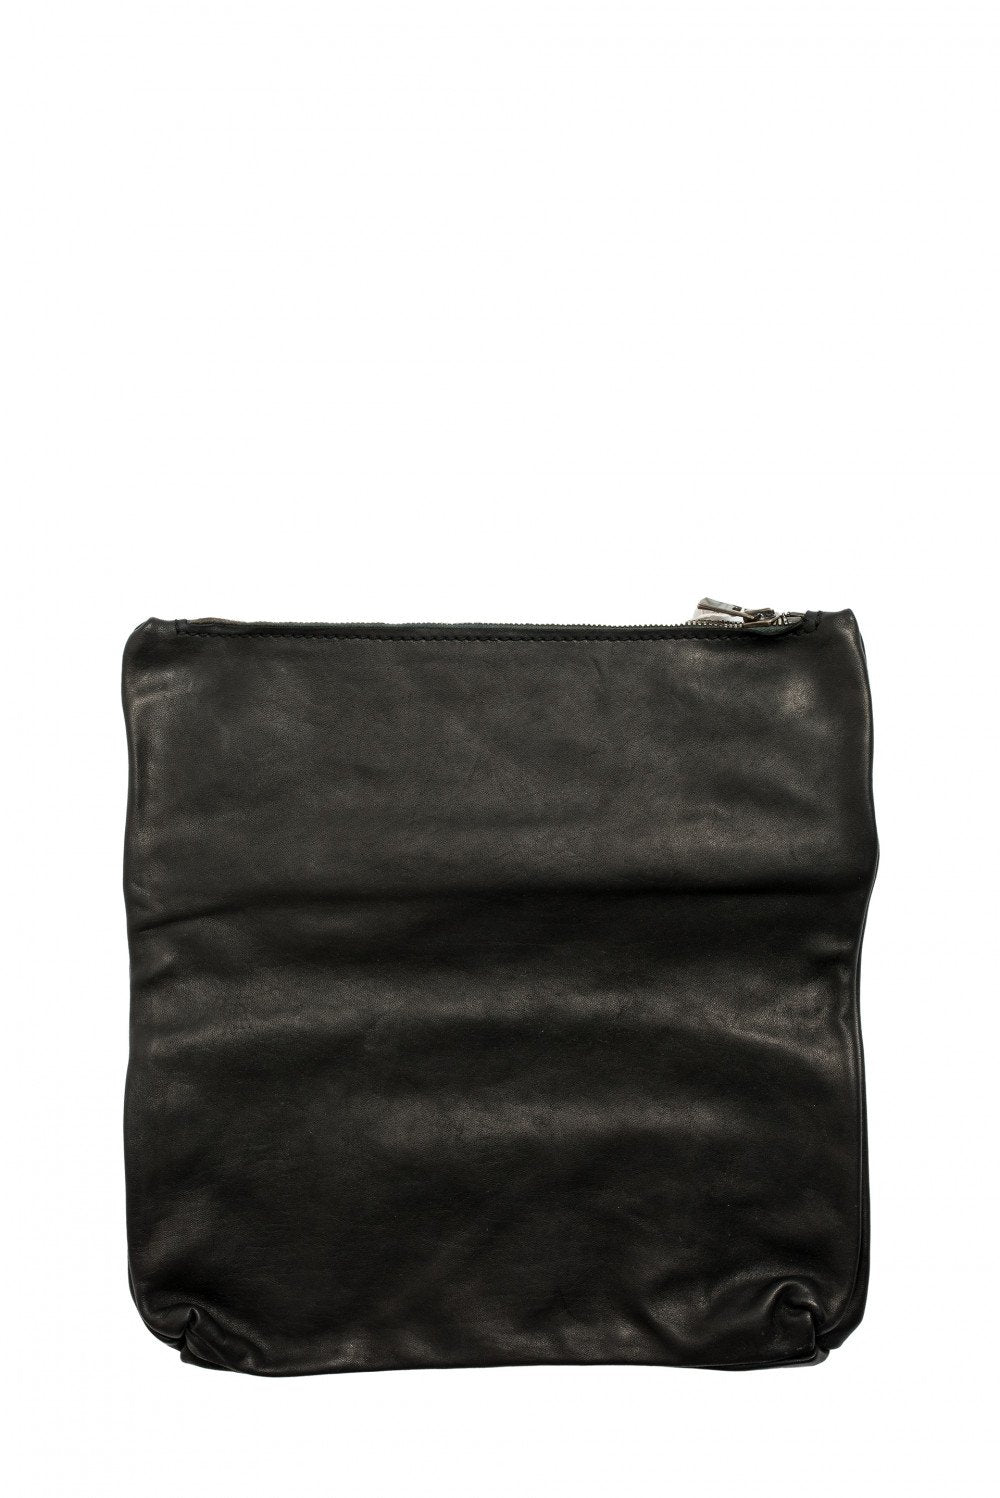 Women's Crocodile Embossed Mini Handbag Croc-Effect Leather Tote Bag Top  Handle | POPBAE